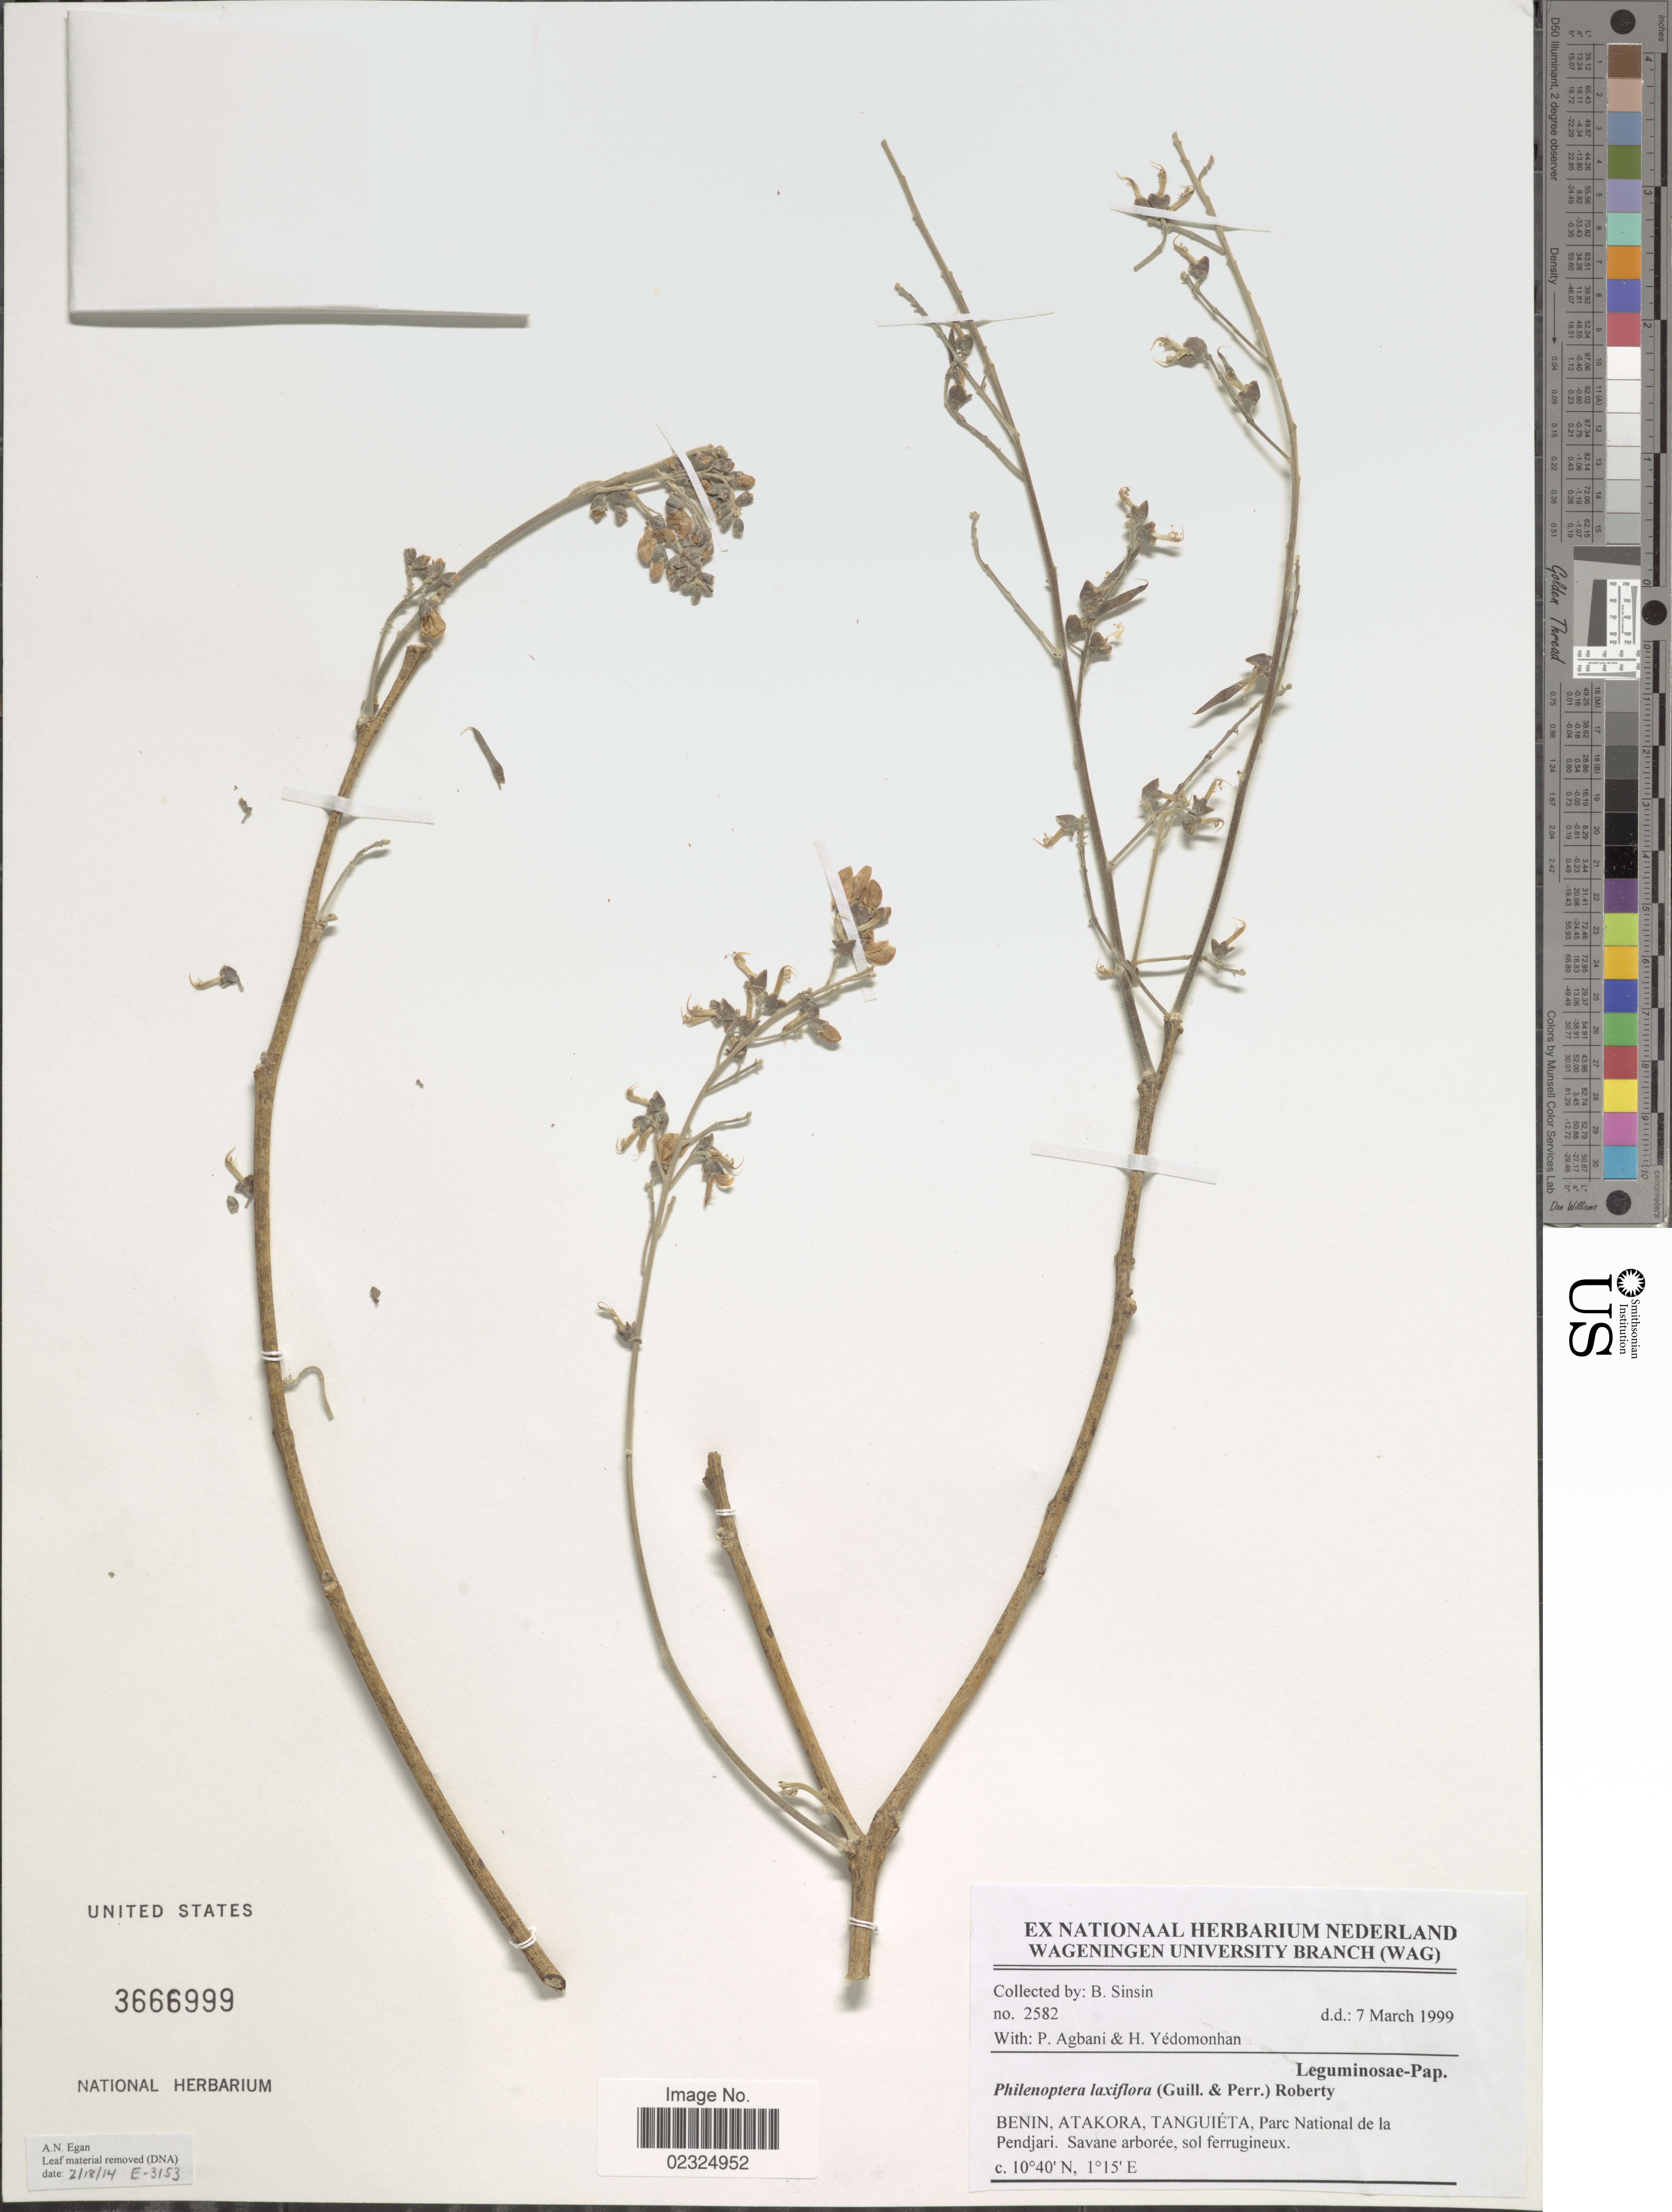 Image of Lonchocarpus laxiflorus Guill. & Perr.